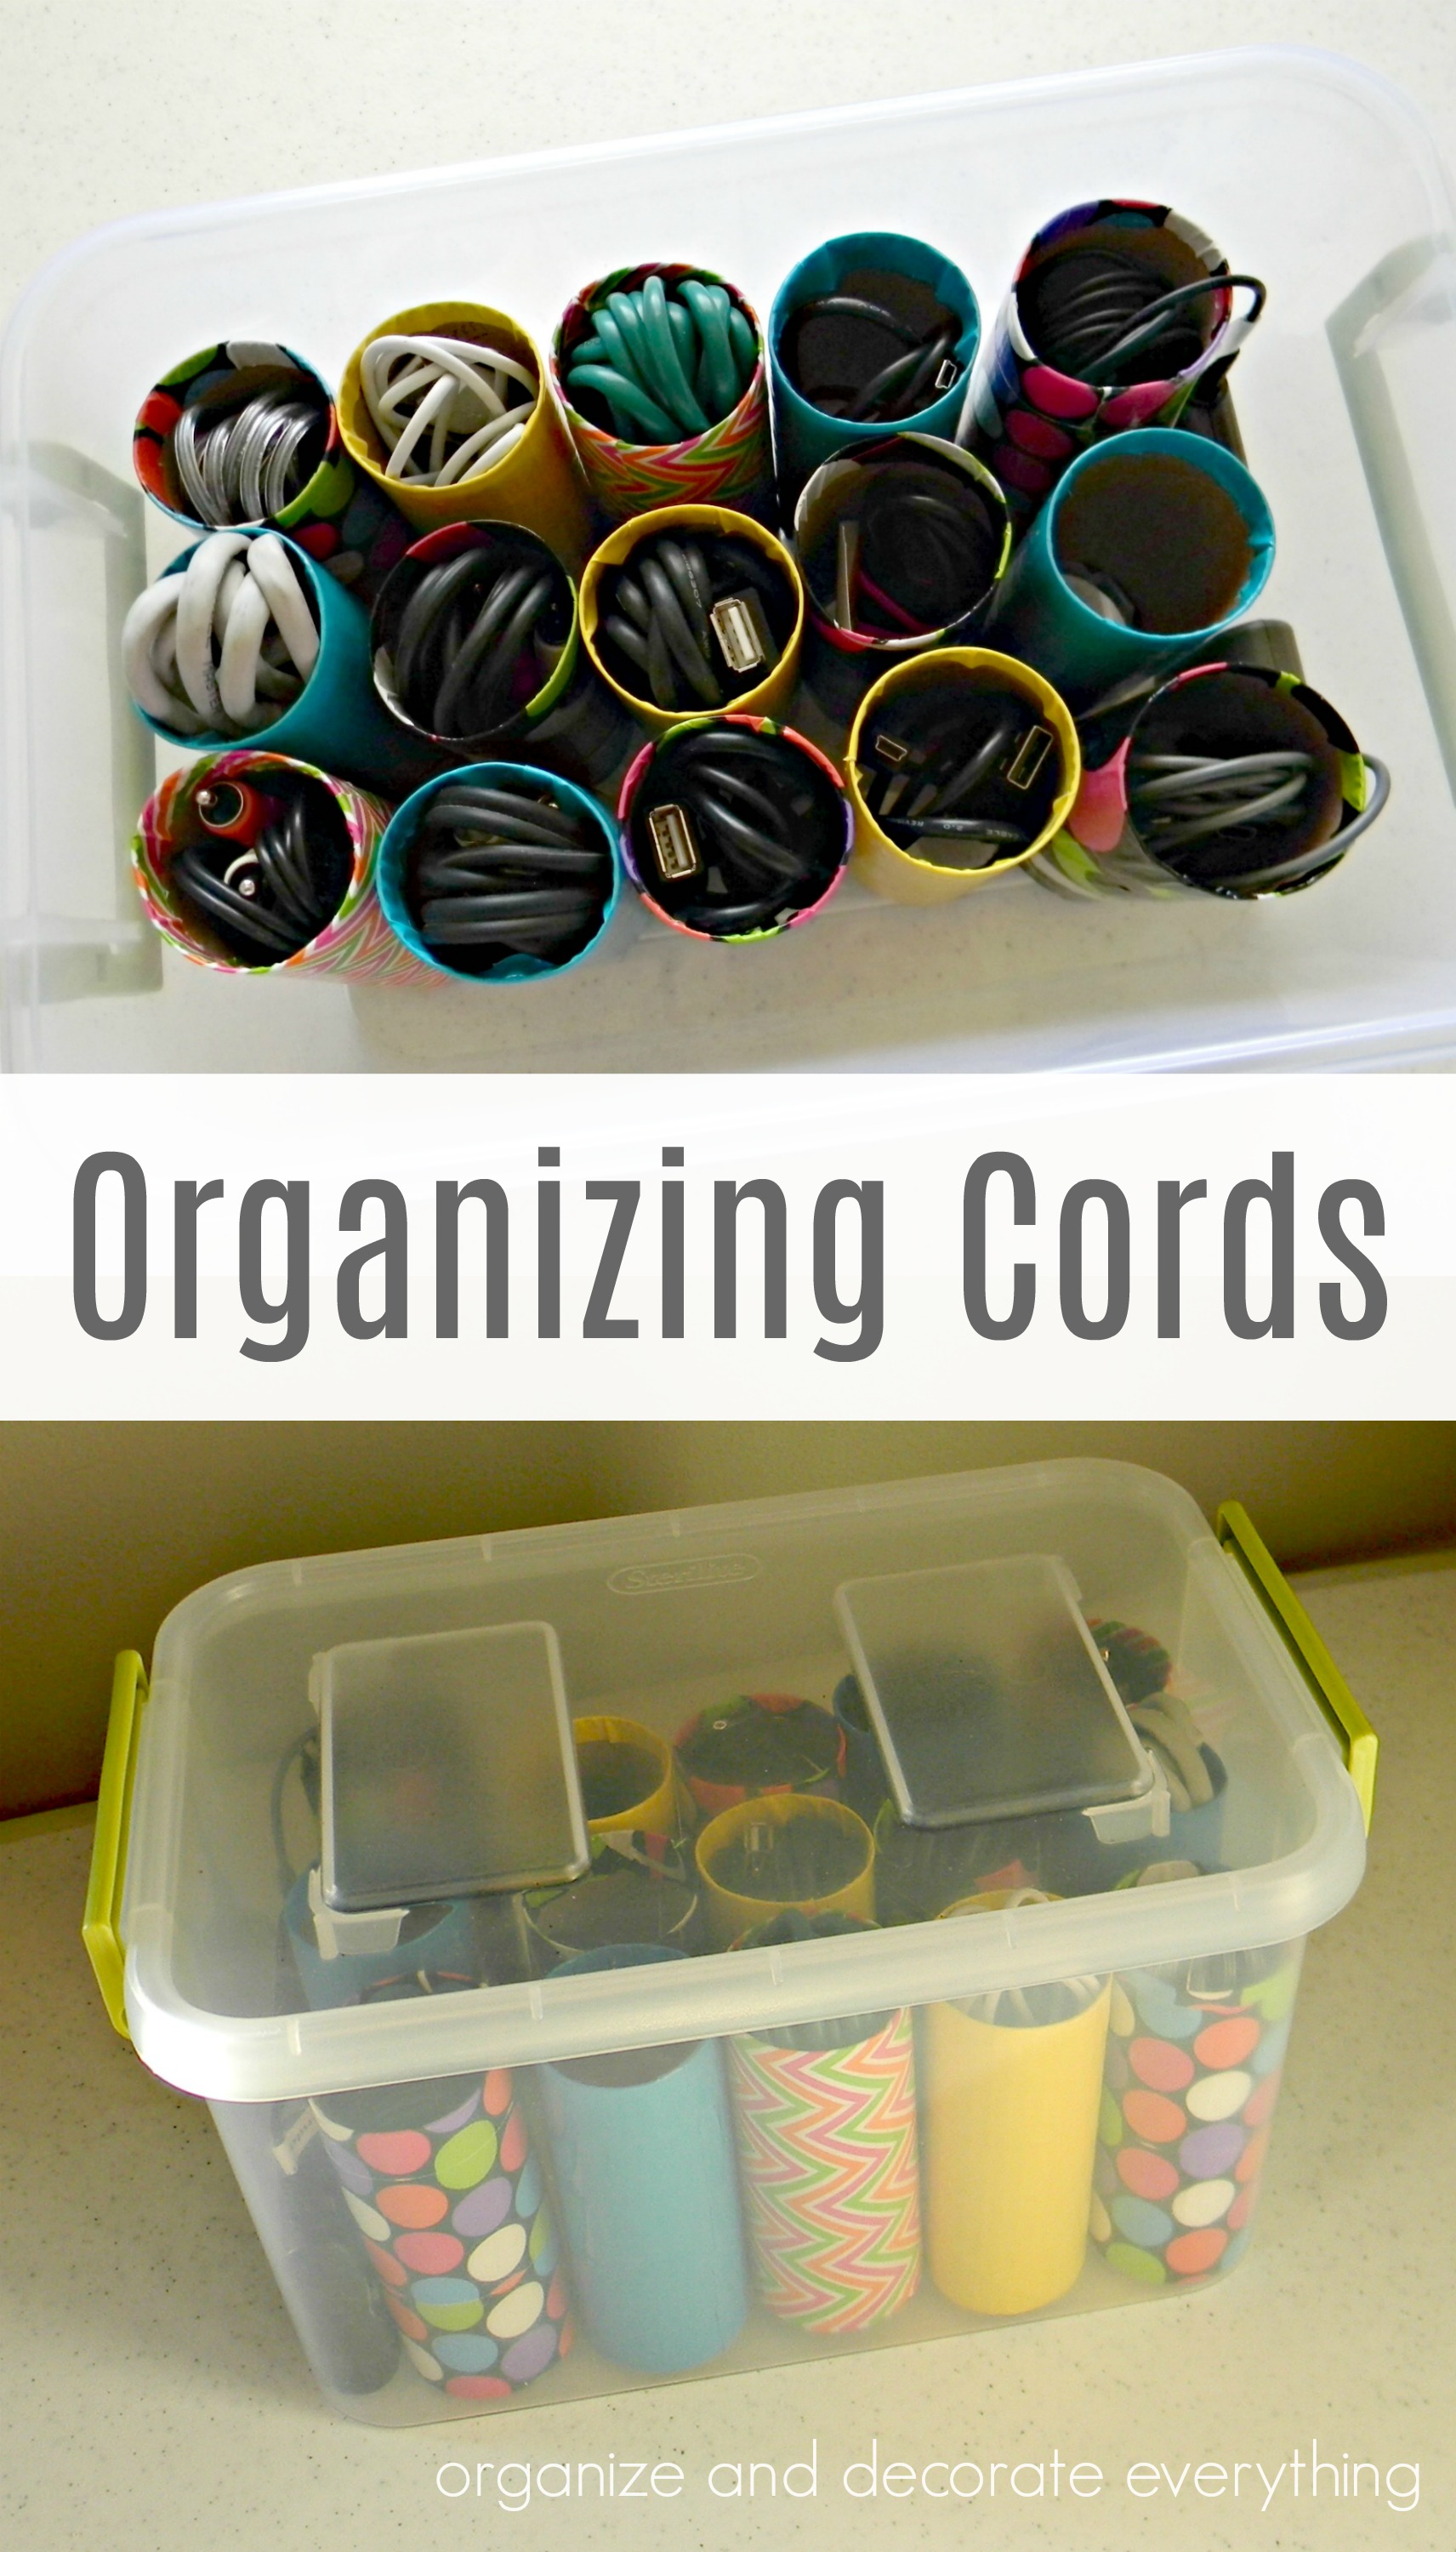 https://organizeyourstuffnow.com/wp-content/uploads/2018/10/Organizing-Cords-with-toilet-paper-rolls.jpg